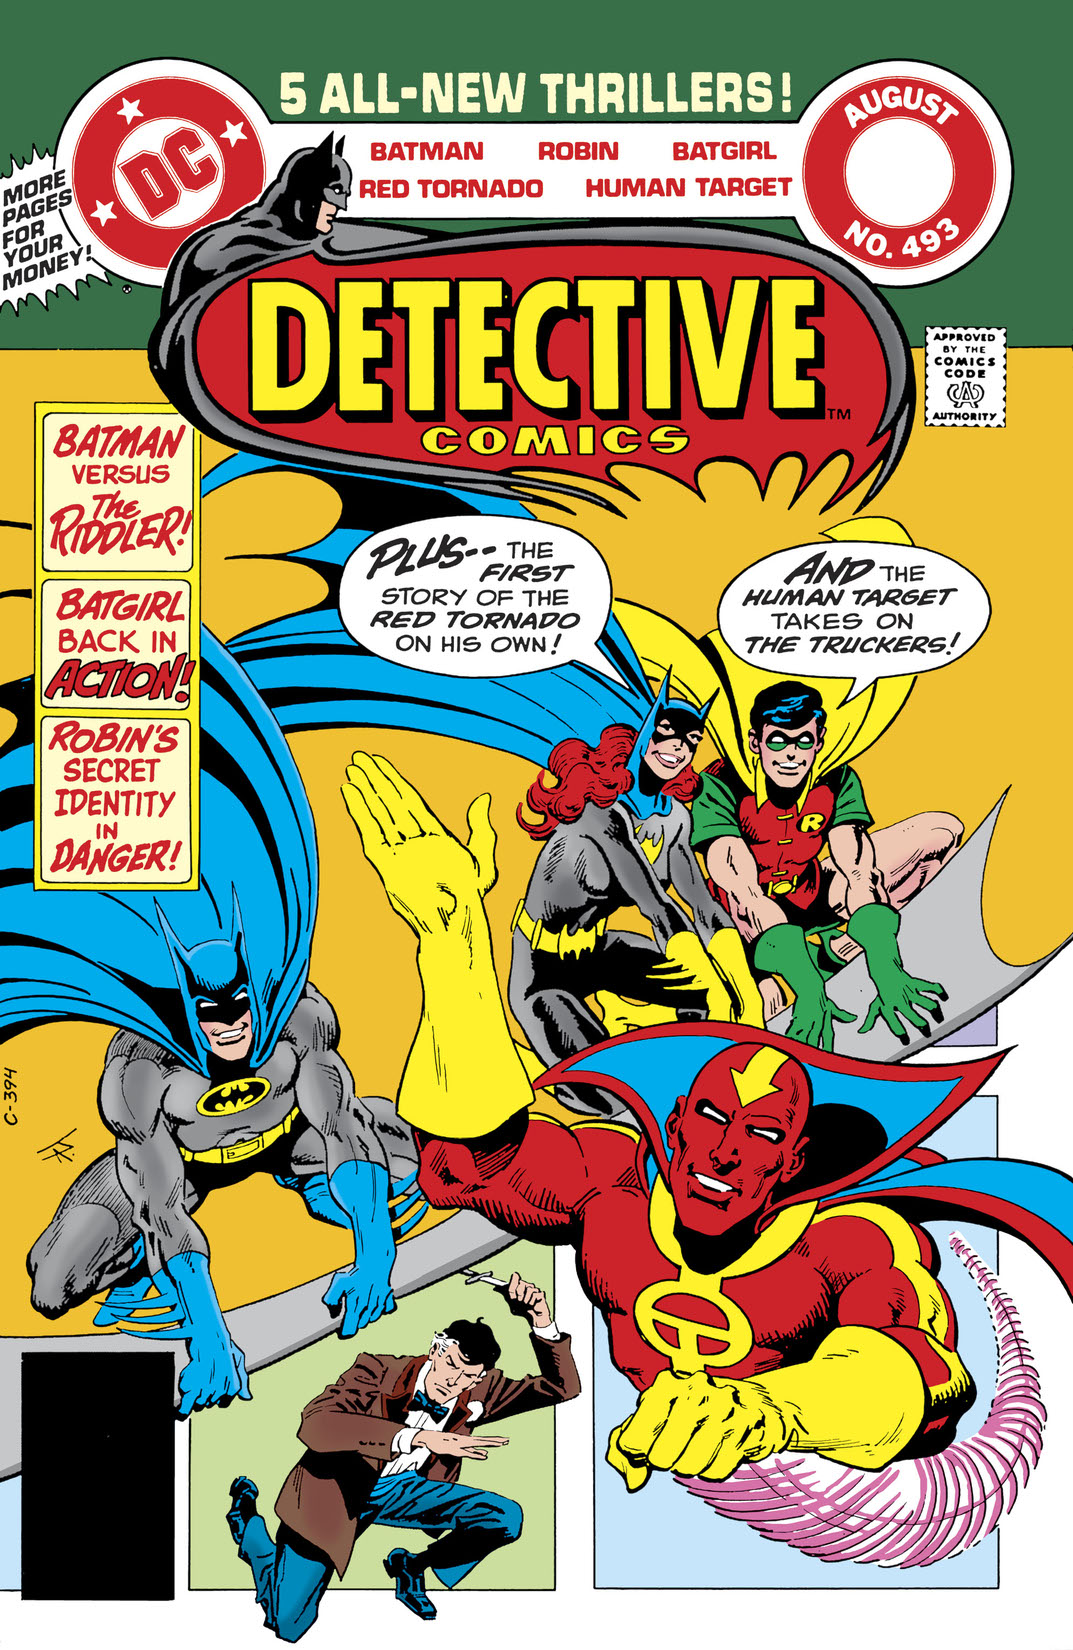 Detective Comics (1937-) #493 preview images